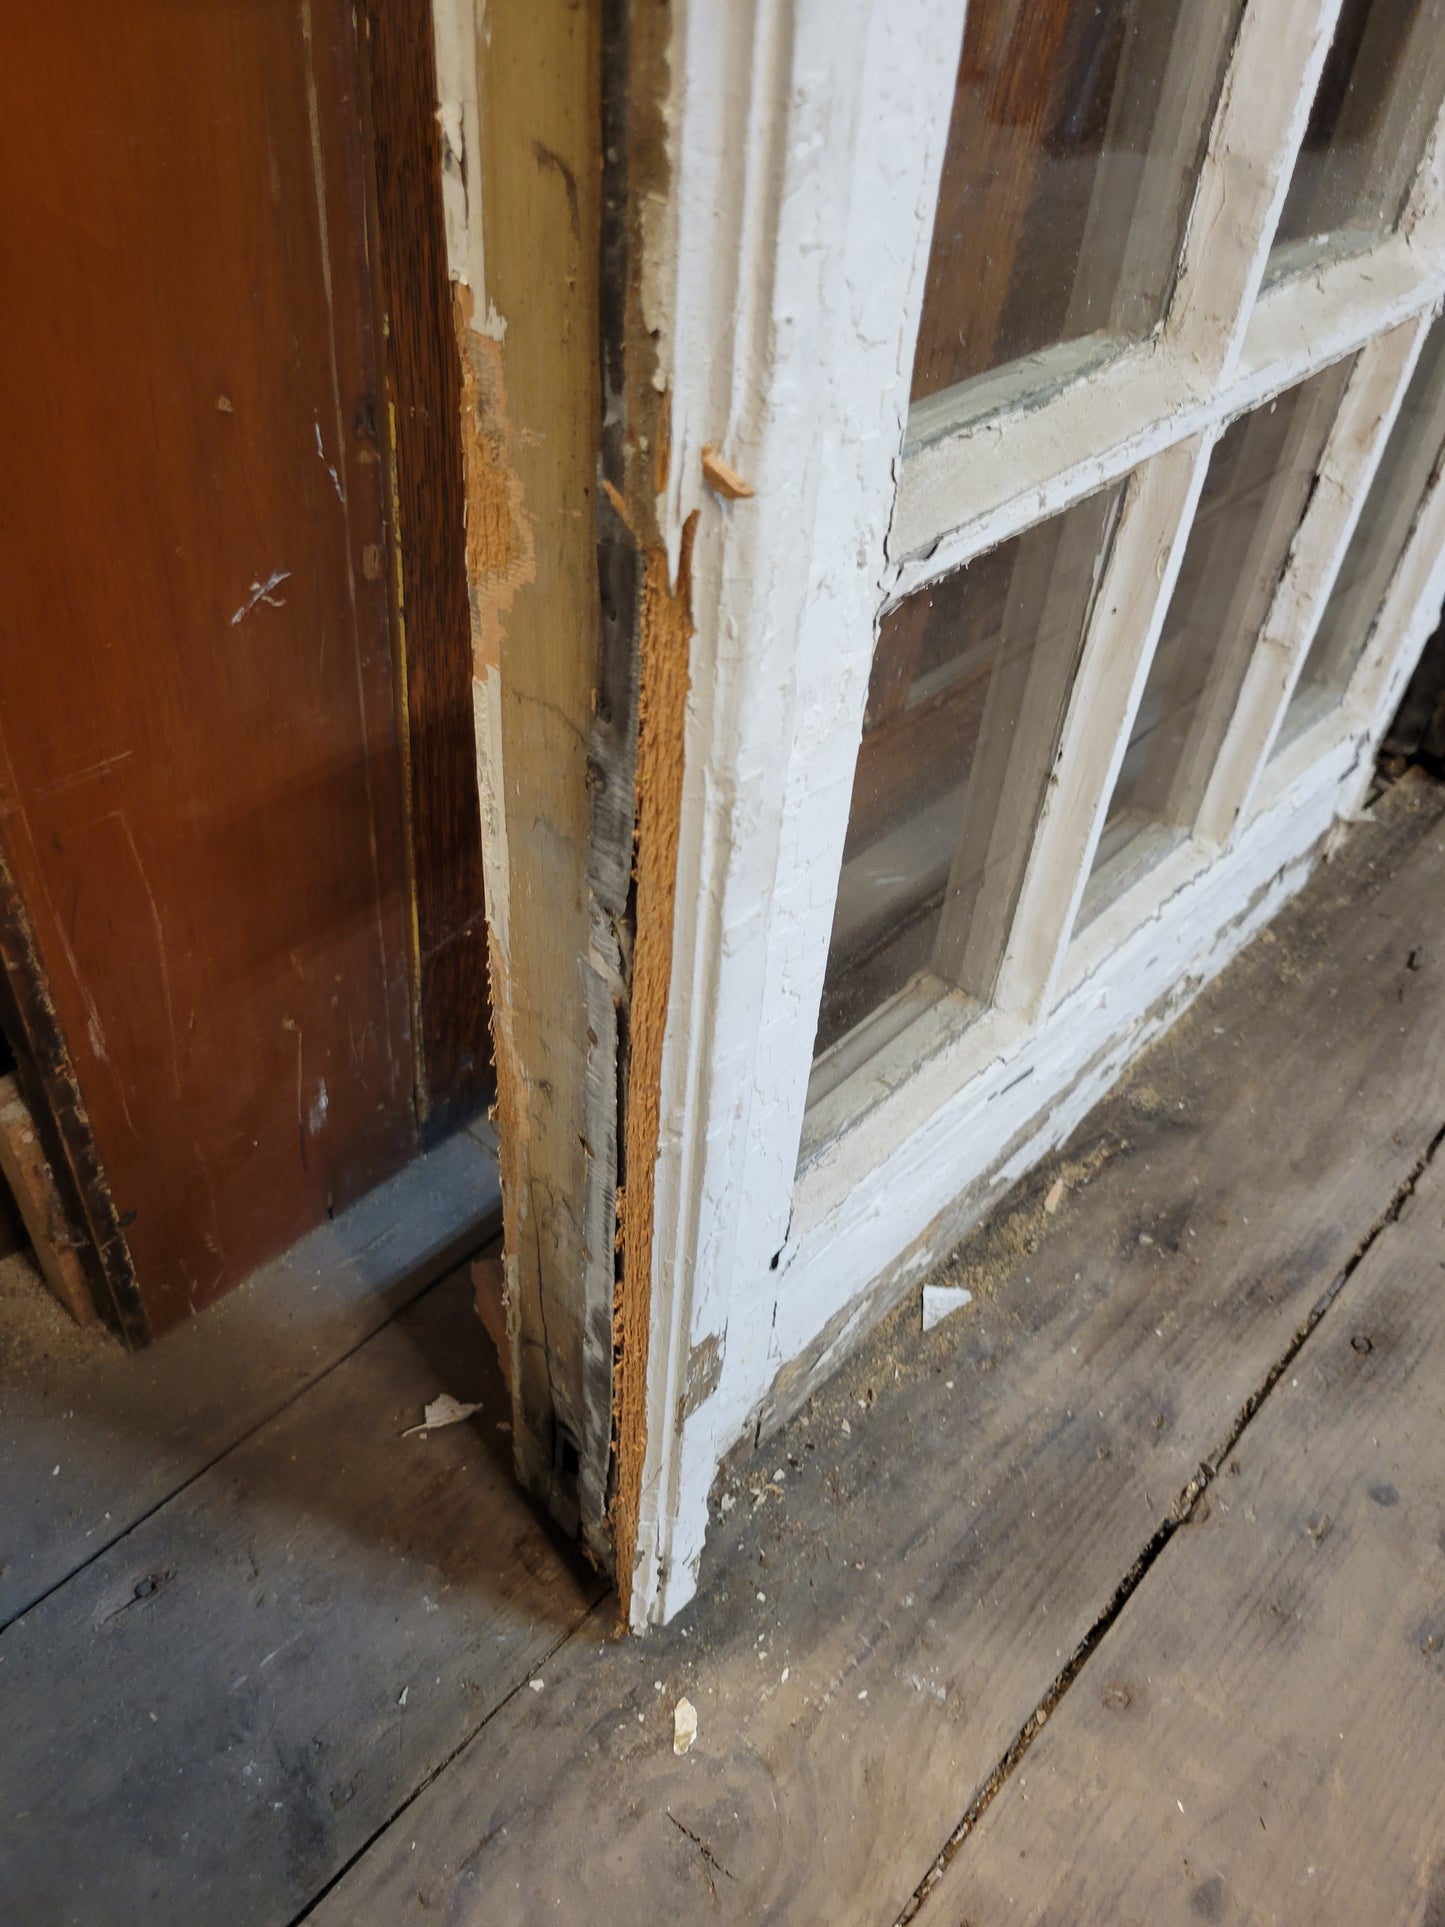 48" White Antique Wood French Door Pair, Set of Glass 21 Pane Double Doors